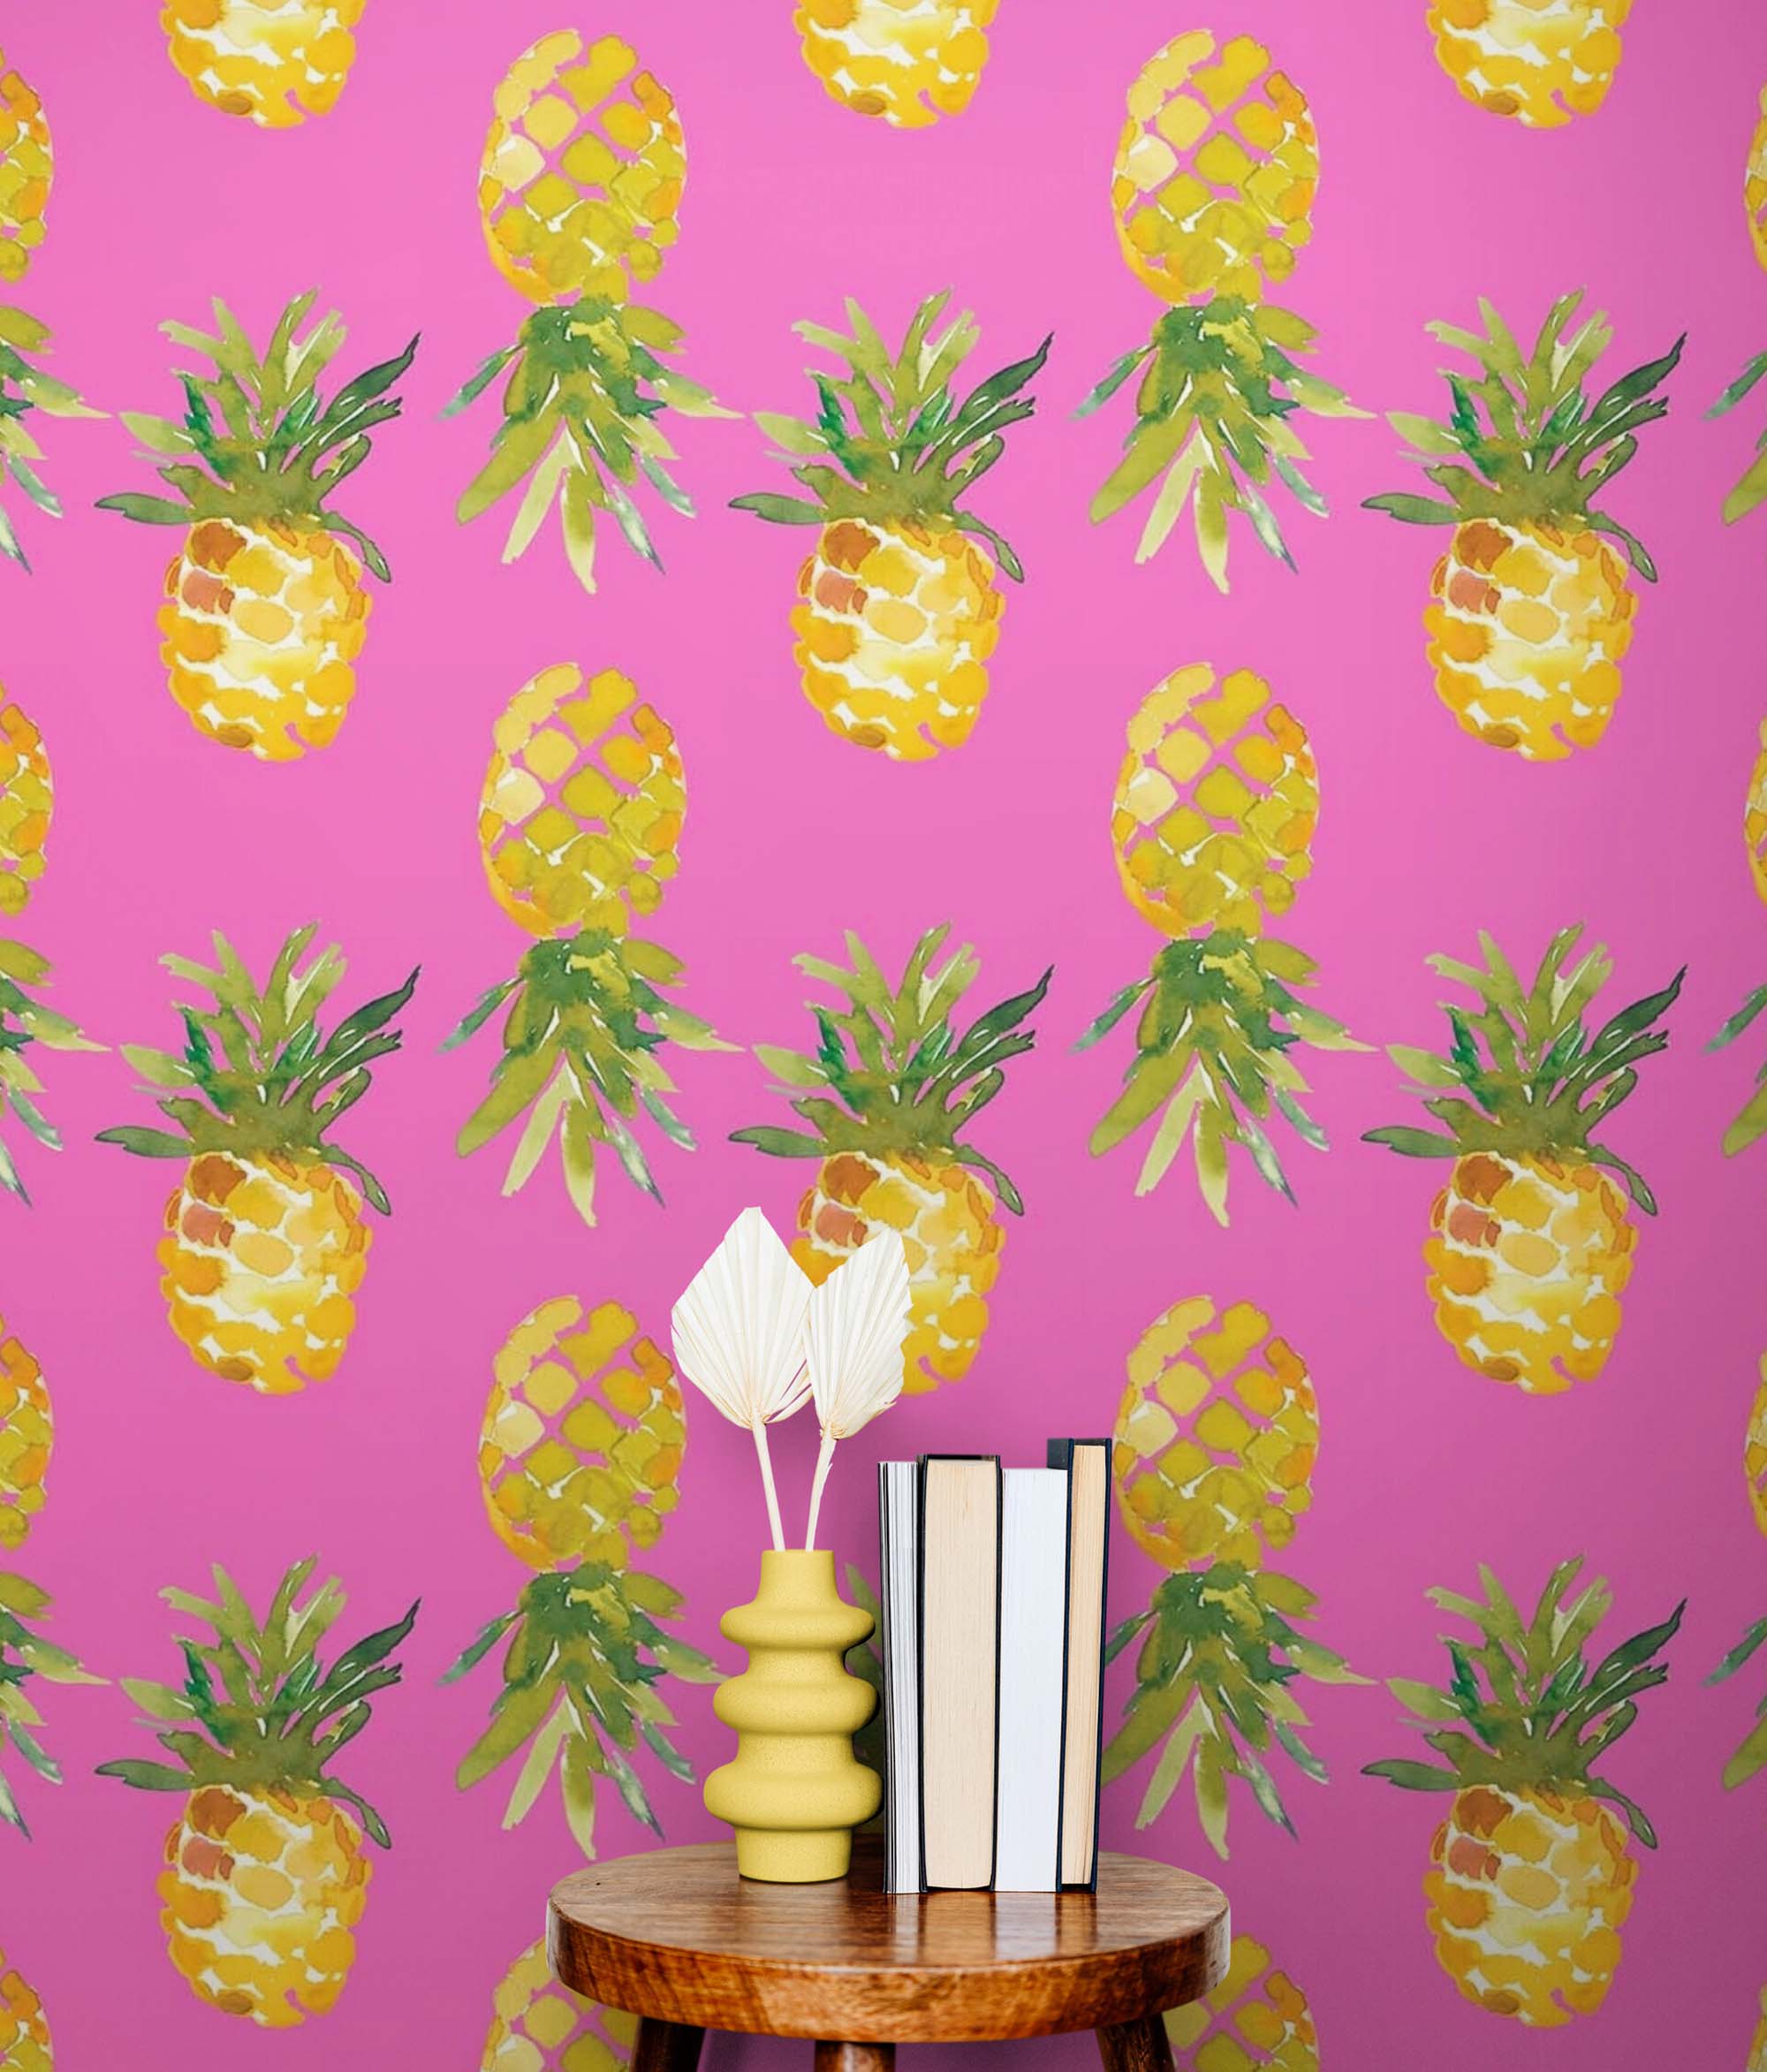 Share more than 197 ananas wallpaper